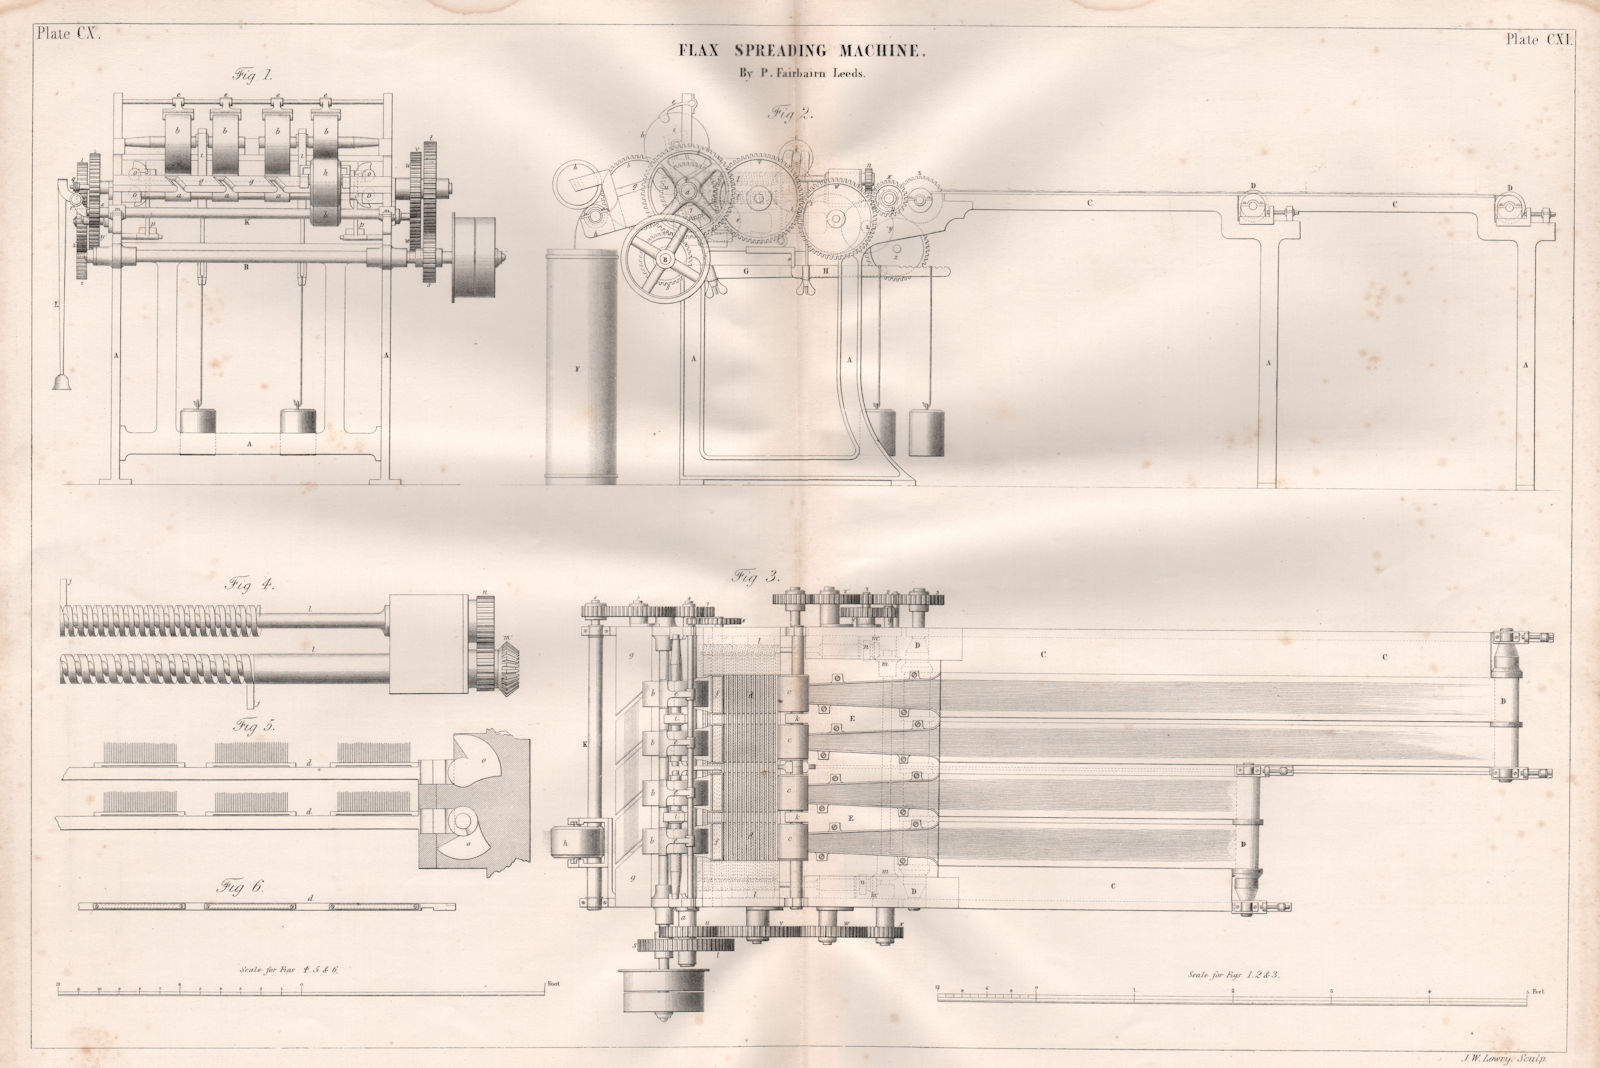 VICTORIAN ENGINEERING DRAWING. Flax spreading machine. P. Fairbairn, Leeds 1847